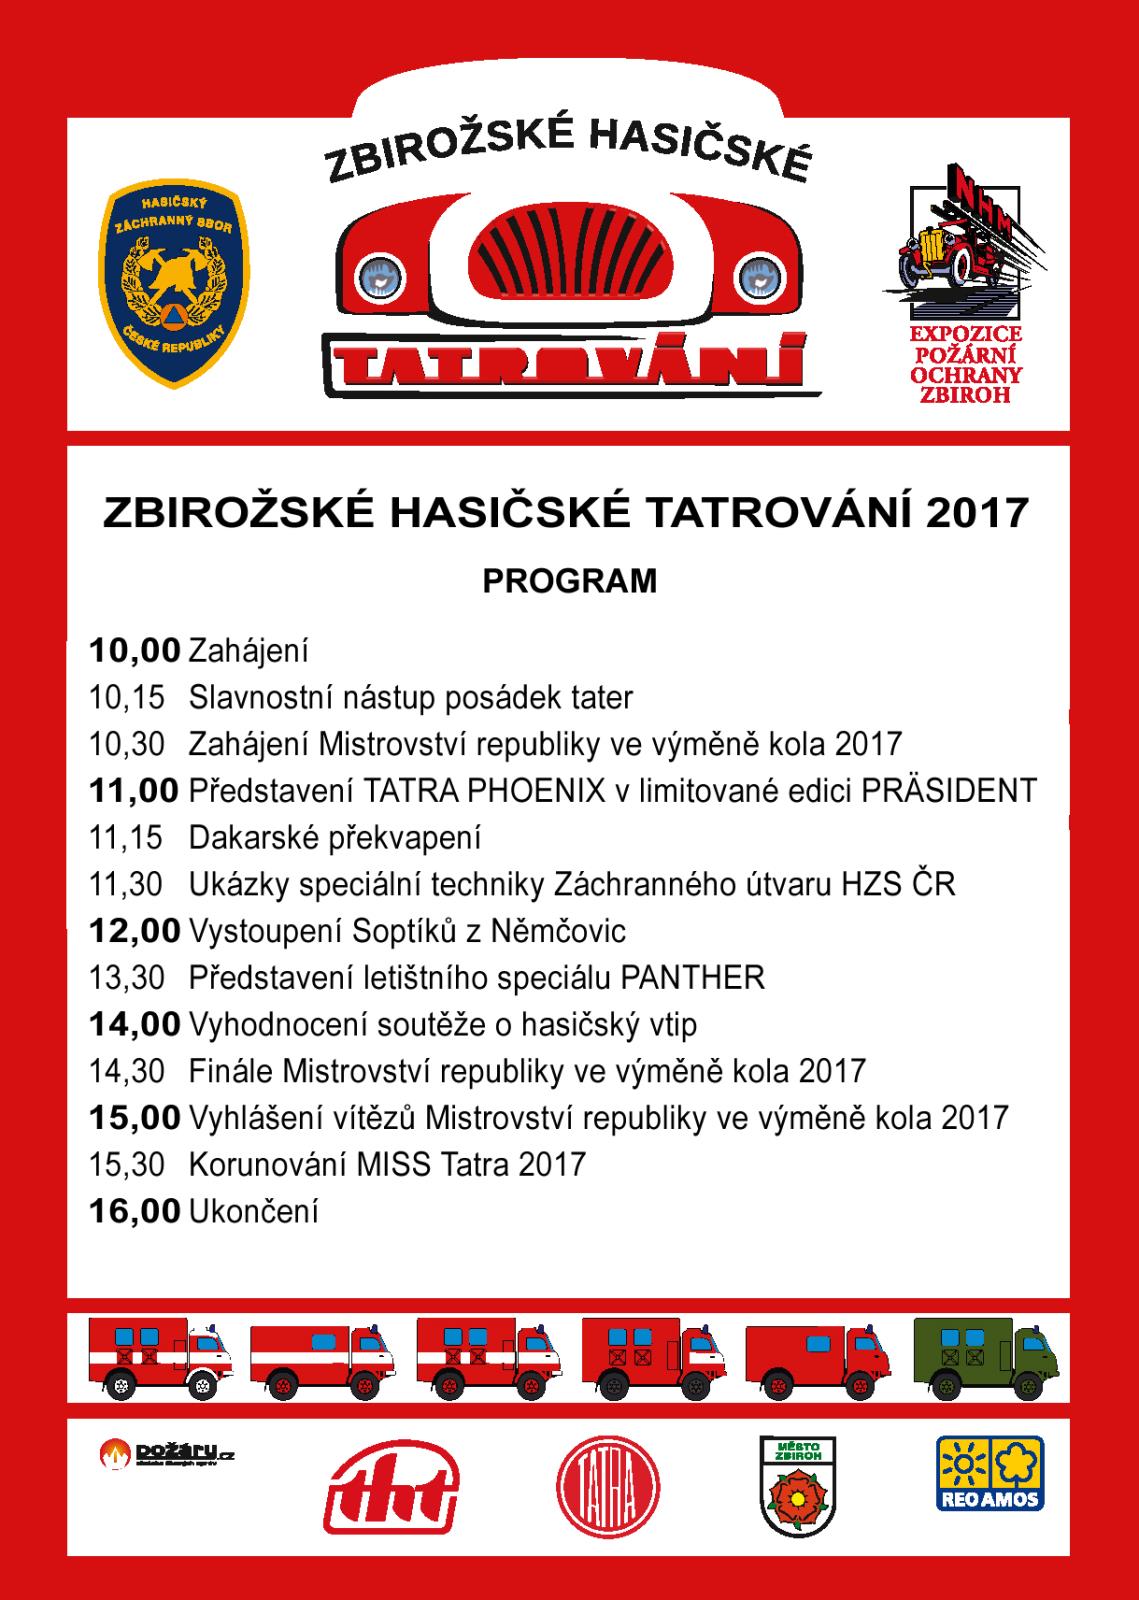 tatrovani-2017-program-v1-z.jpg